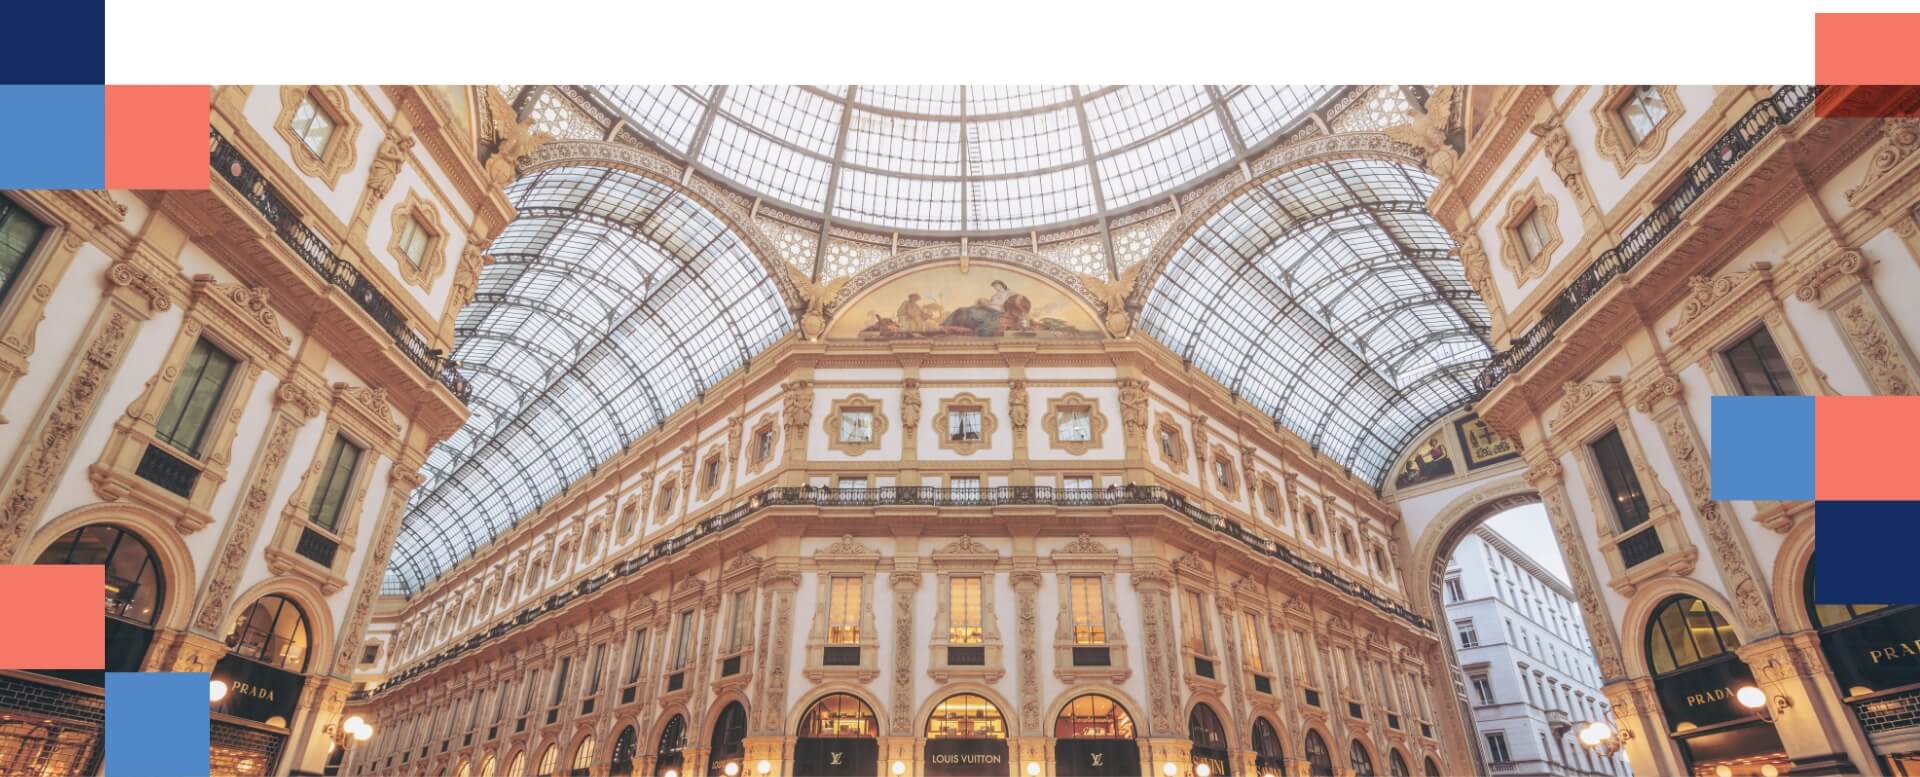 In der Galleria Vittorio Emanuele II in Mailand